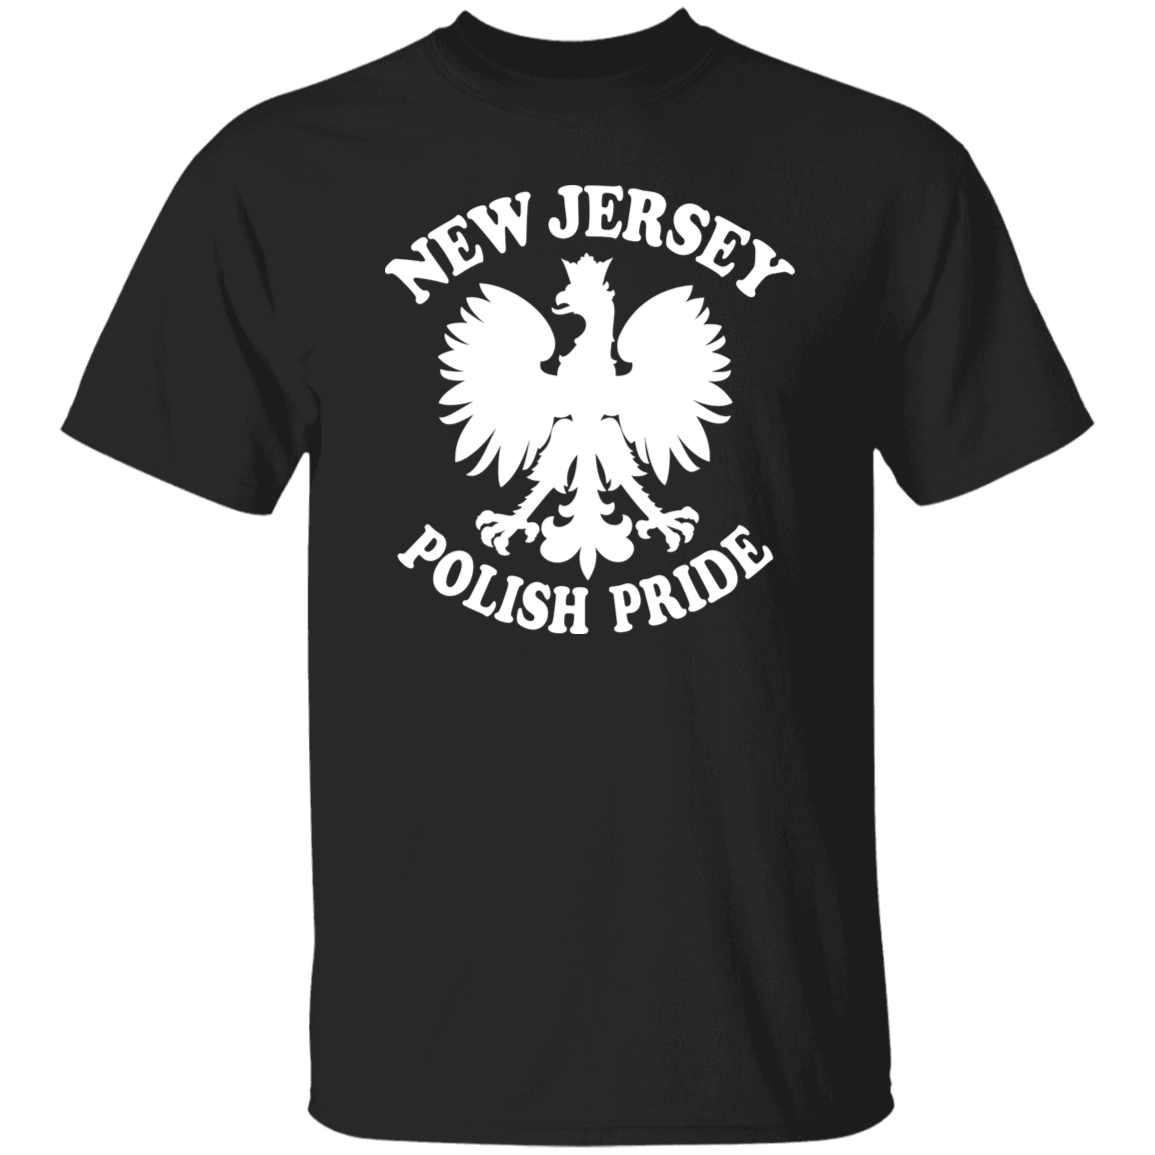 New Jersey Polish Pride Apparel CustomCat G500 5.3 oz. T-Shirt Black S